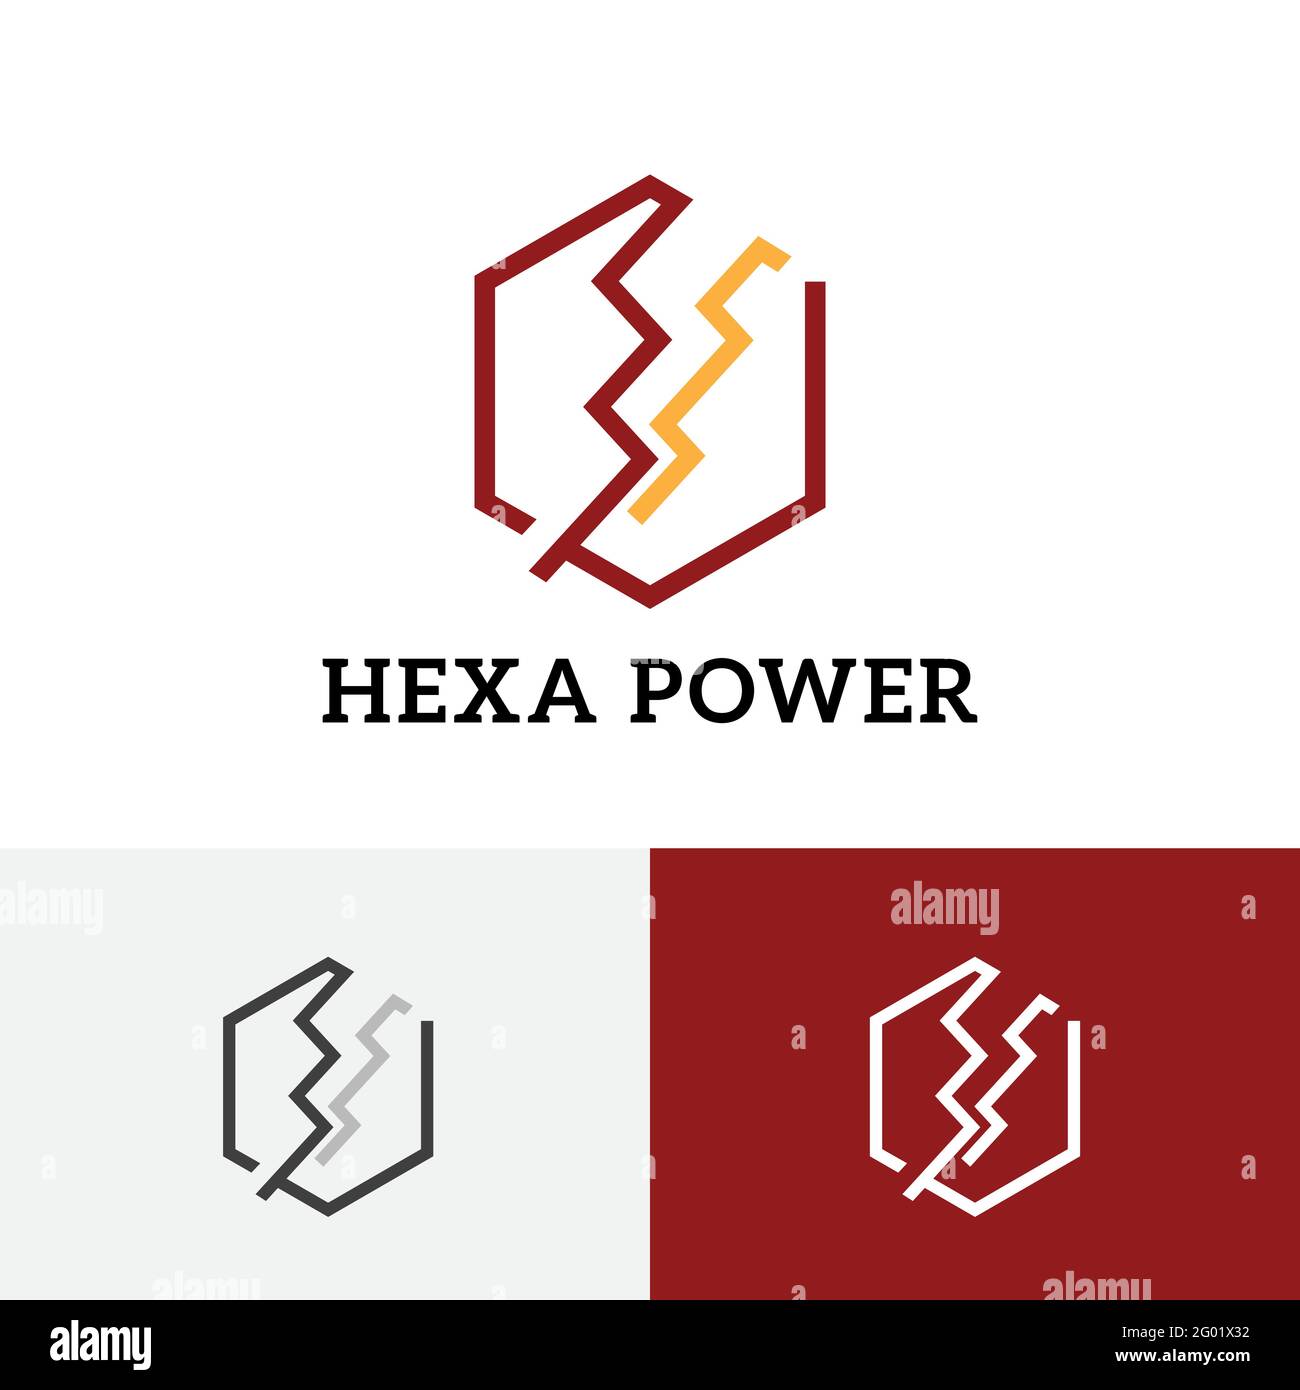 Hexagon Thunder Storm Power Energy Electricity Line Logo Stock Vector